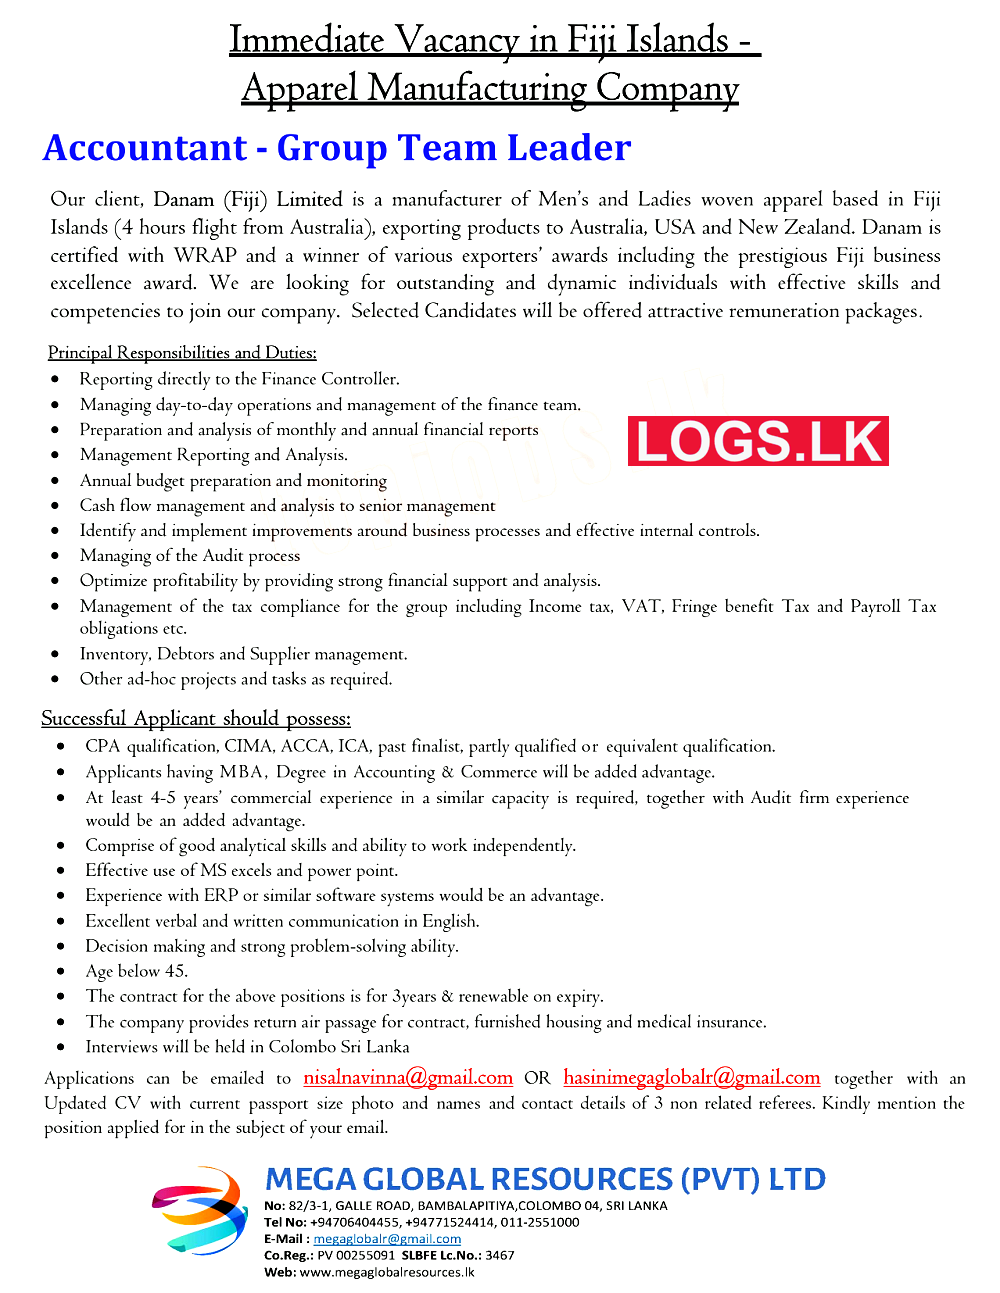 Accountant Job Vacancy at Mega Global Resources Job Vacancies in Sri Lanka